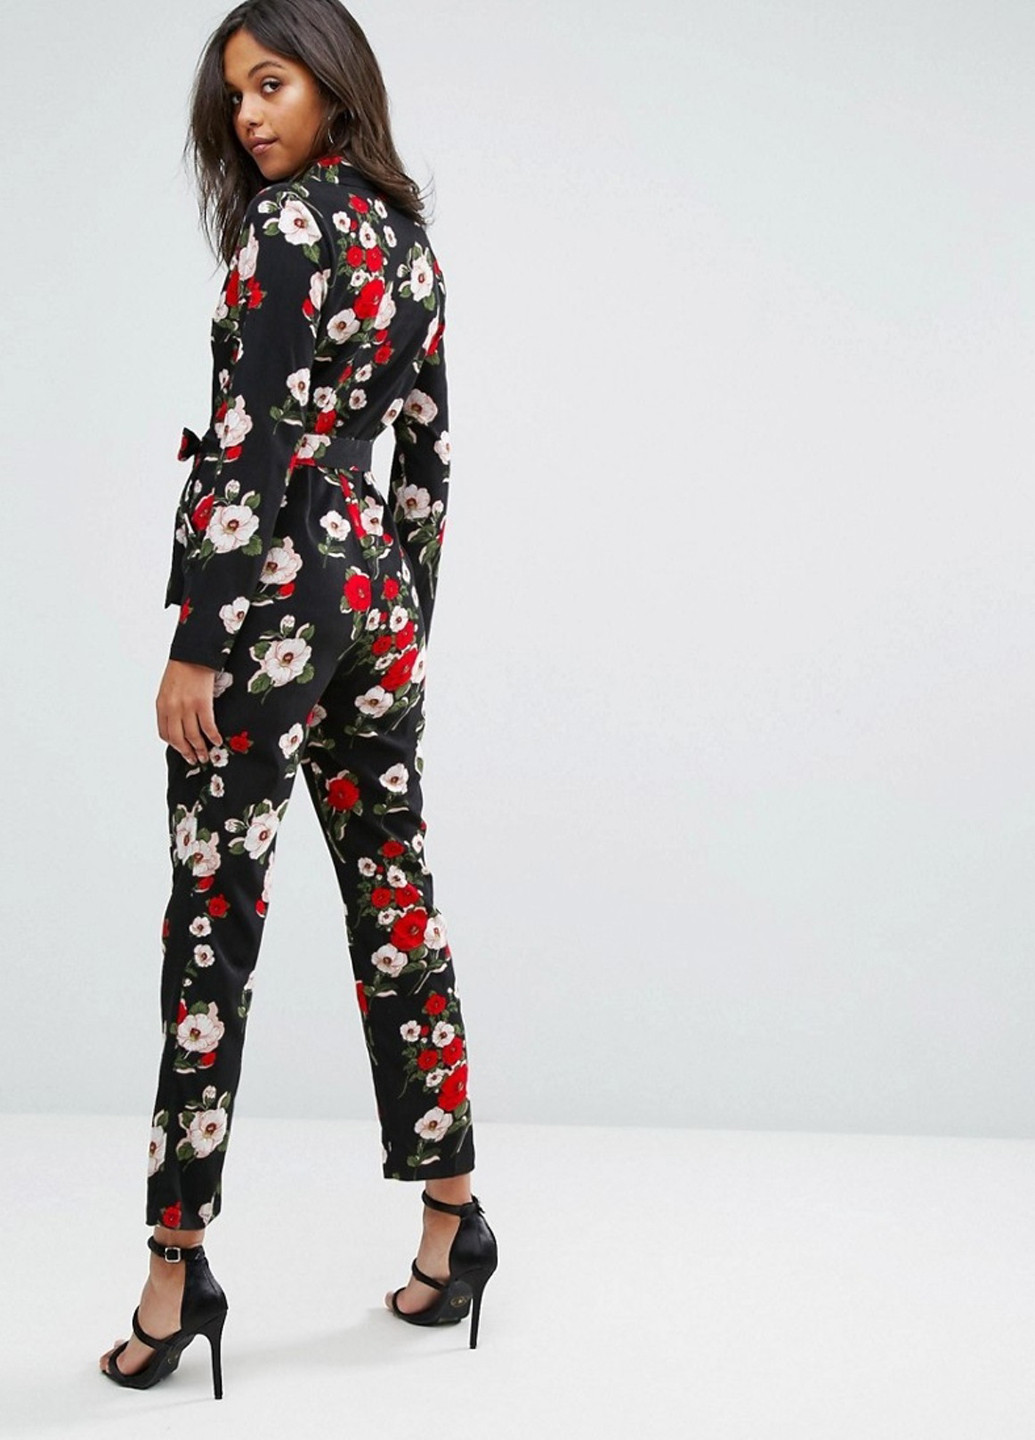 Комбинезон Missguided комбинезон-брюки цветочный чёрный кэжуал полиэстер